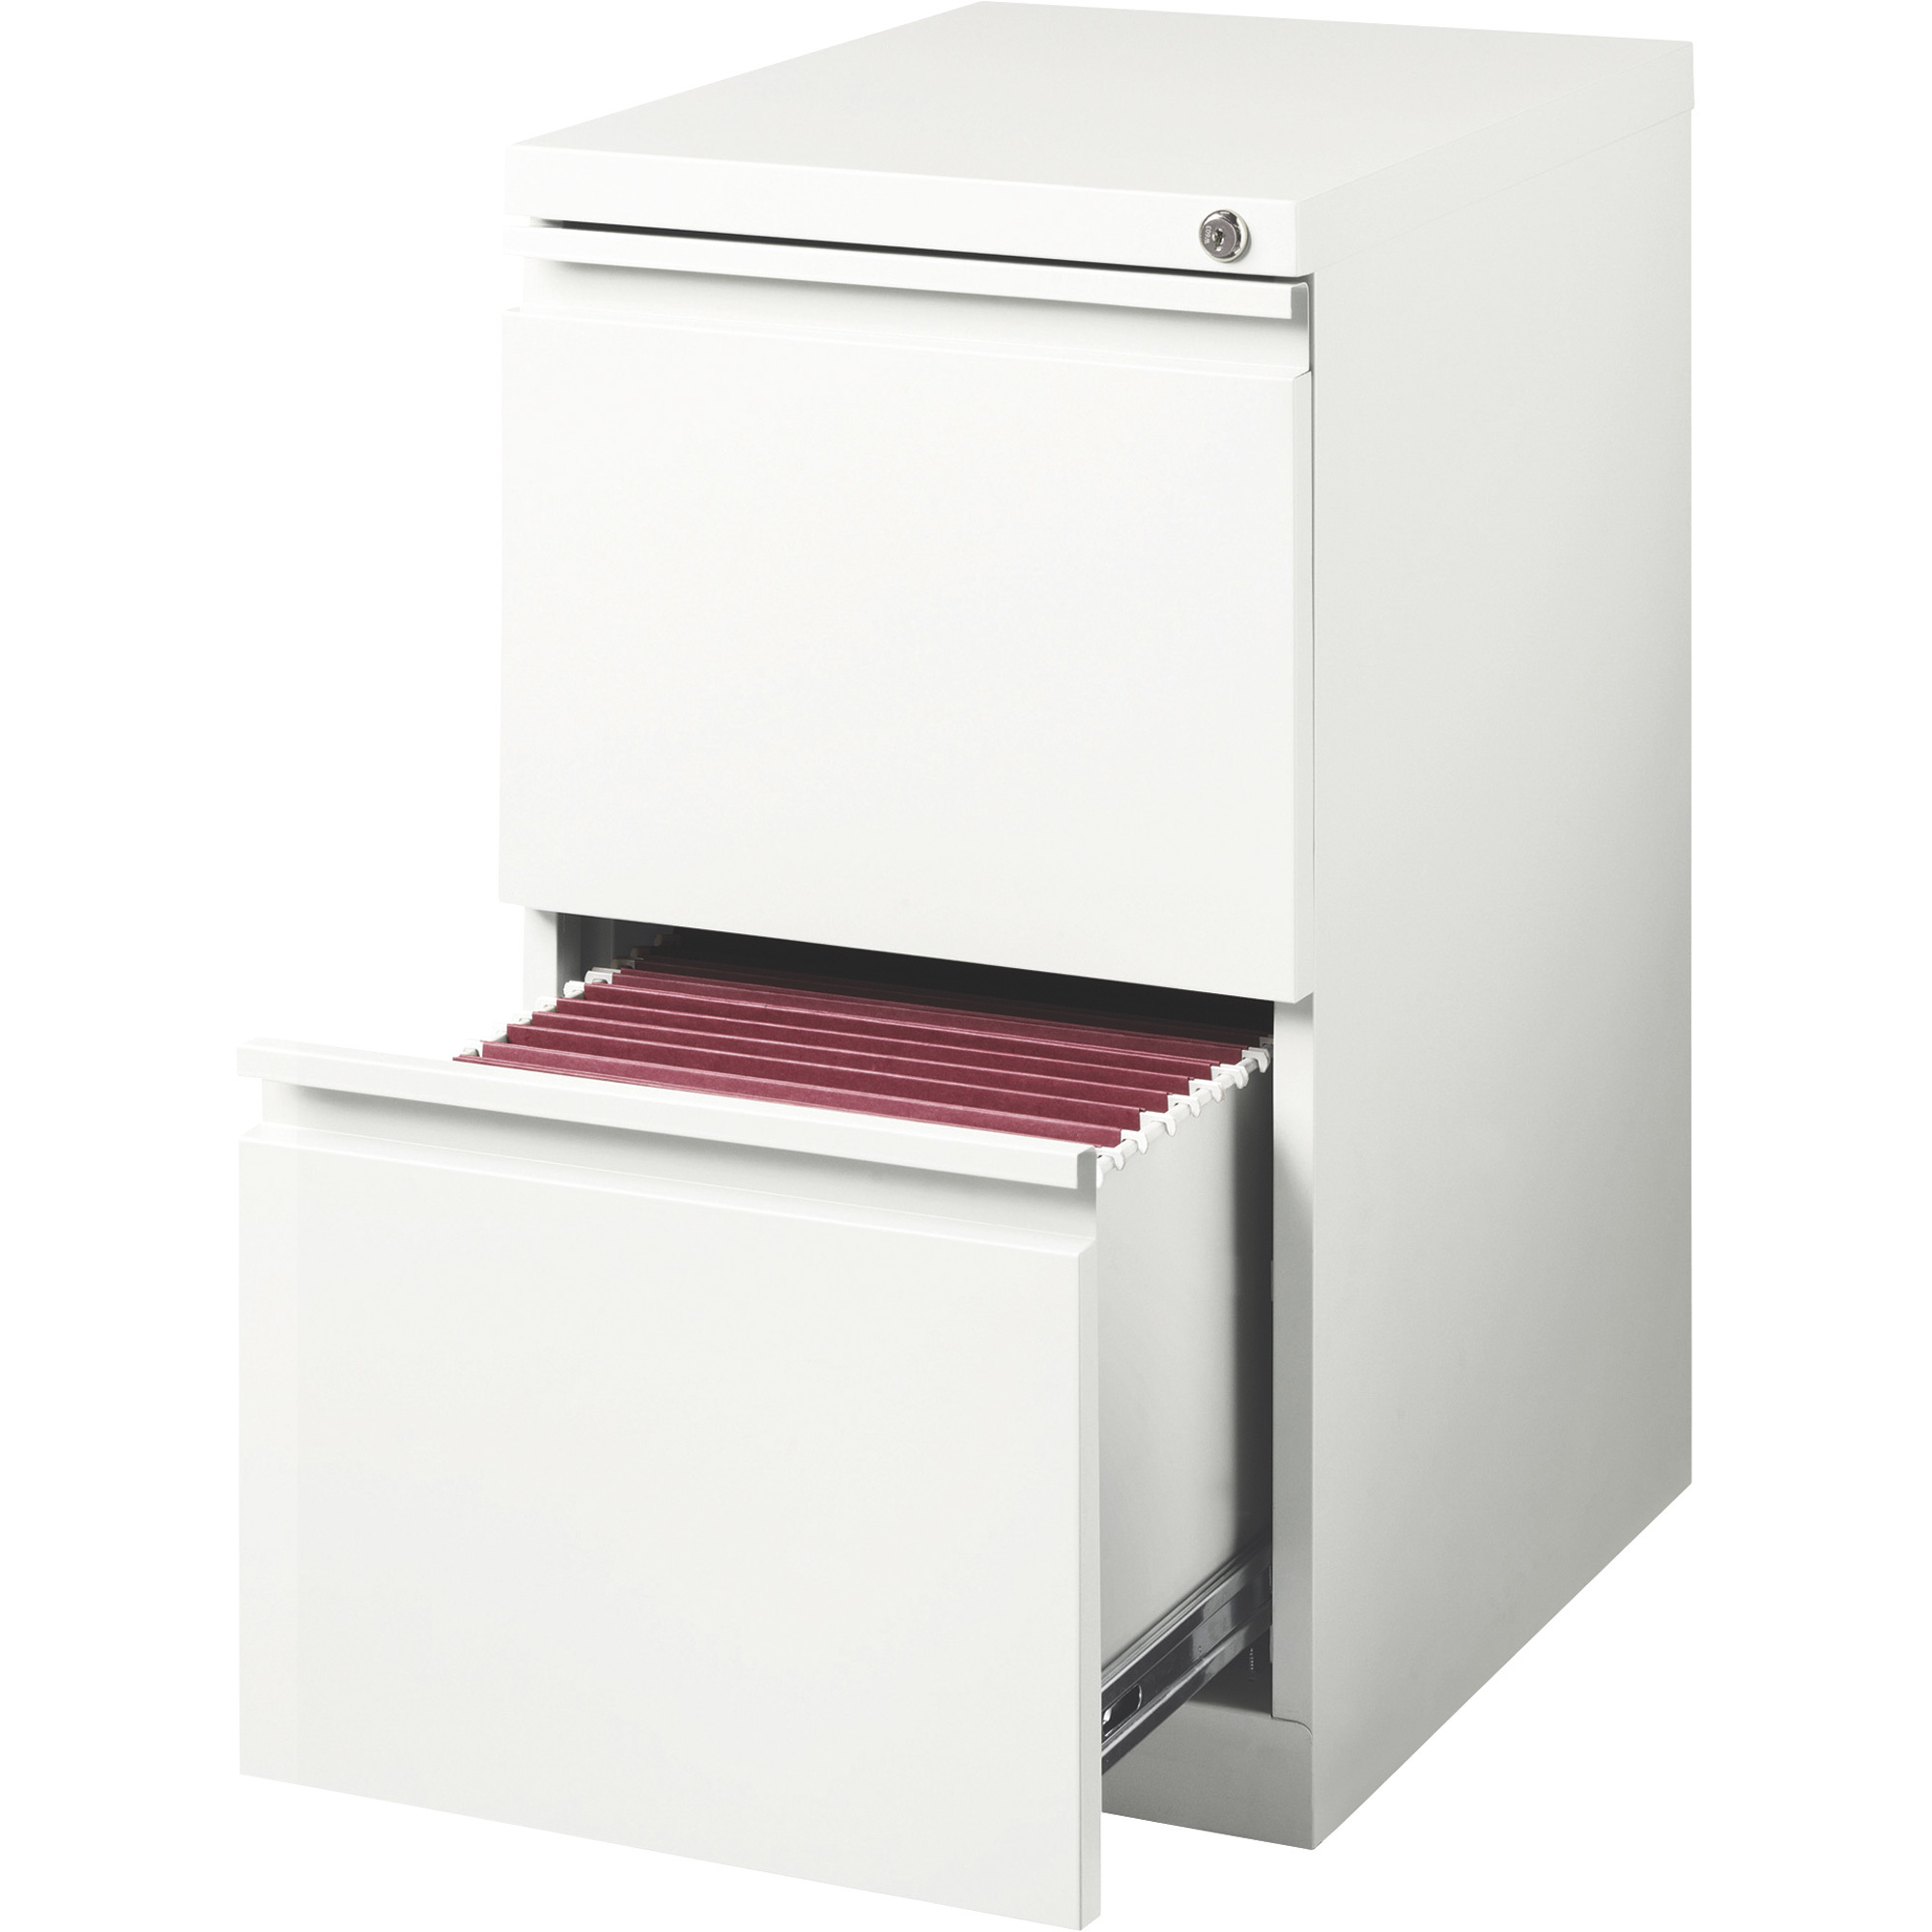 Hirsh Industries 2-Drawer Mobile Pedestal Cabinet for Letter-Size Files â White, 15Inch W x 19 1/8Inch D x 27 1/4Inch H, Model 19357